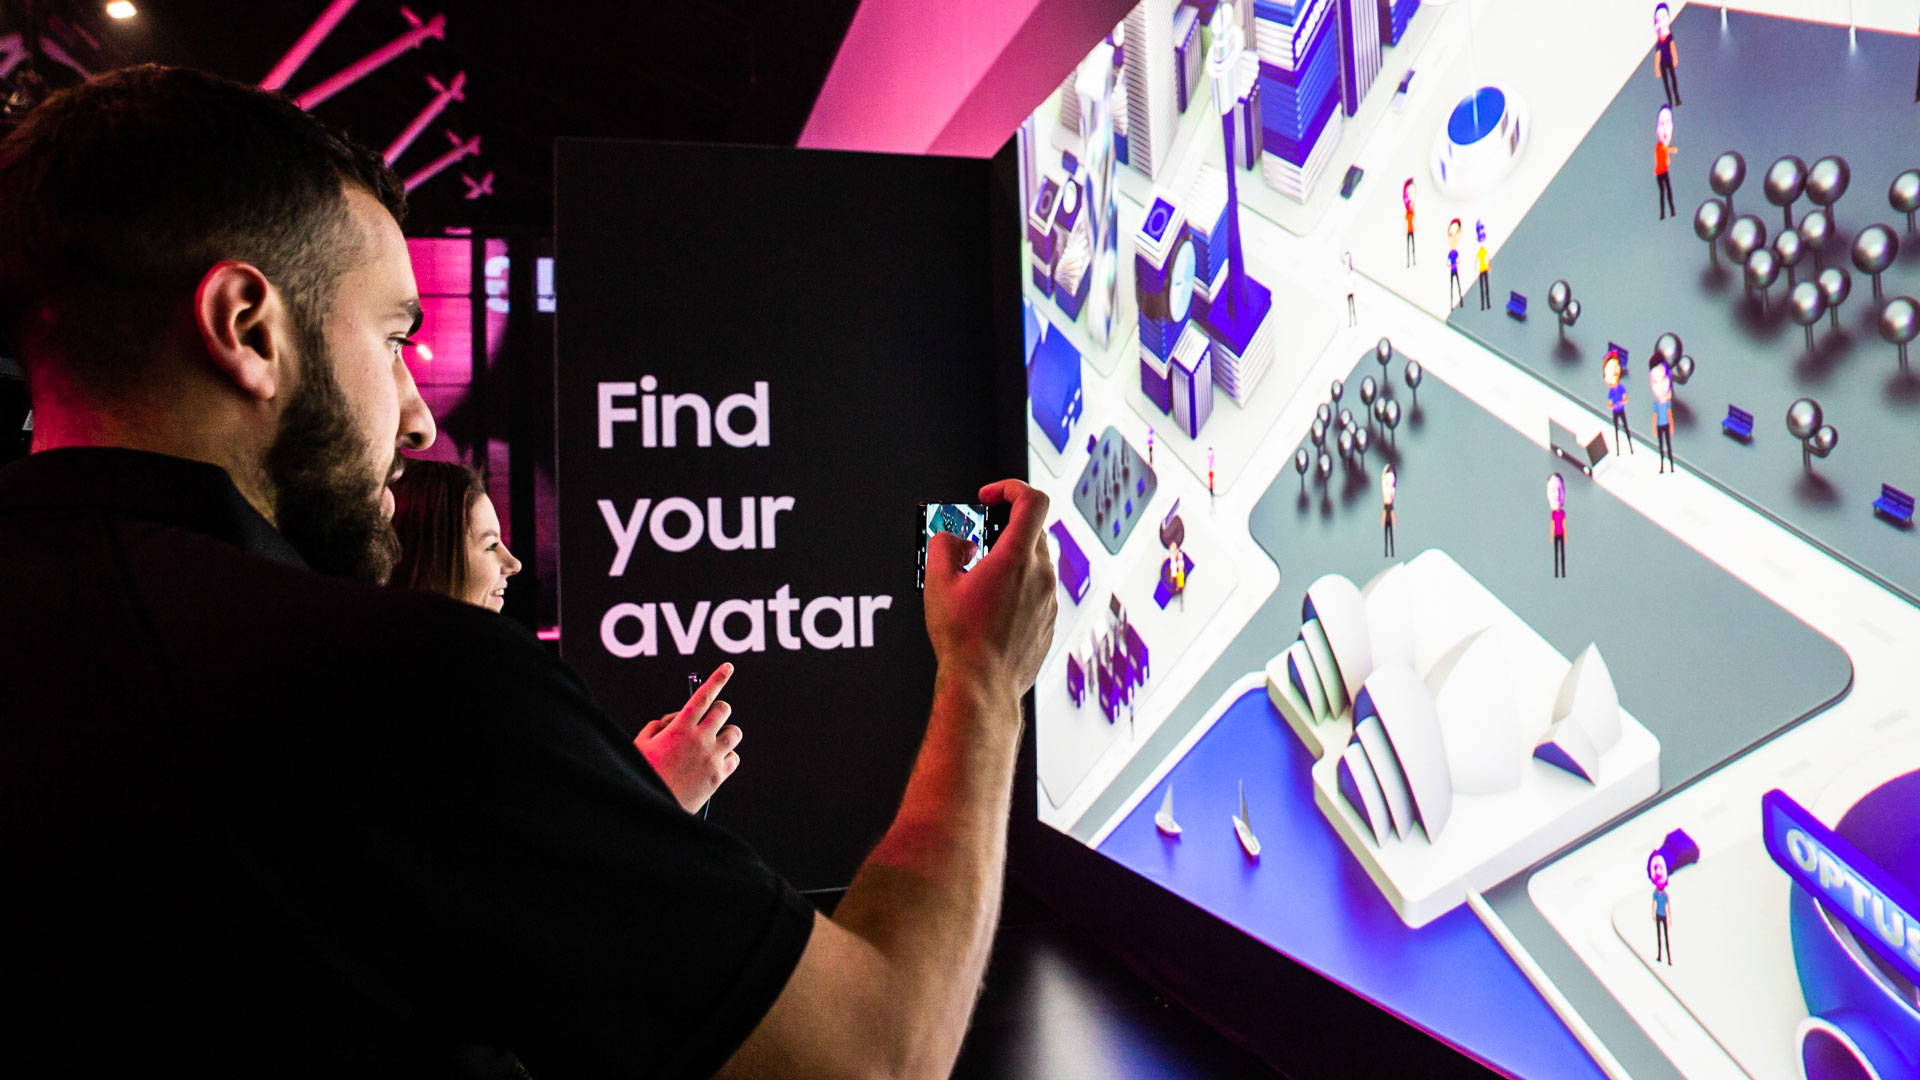 Optus-Kickstart-Samsung-Infinite-Experience-Find-Your-Avatar-124